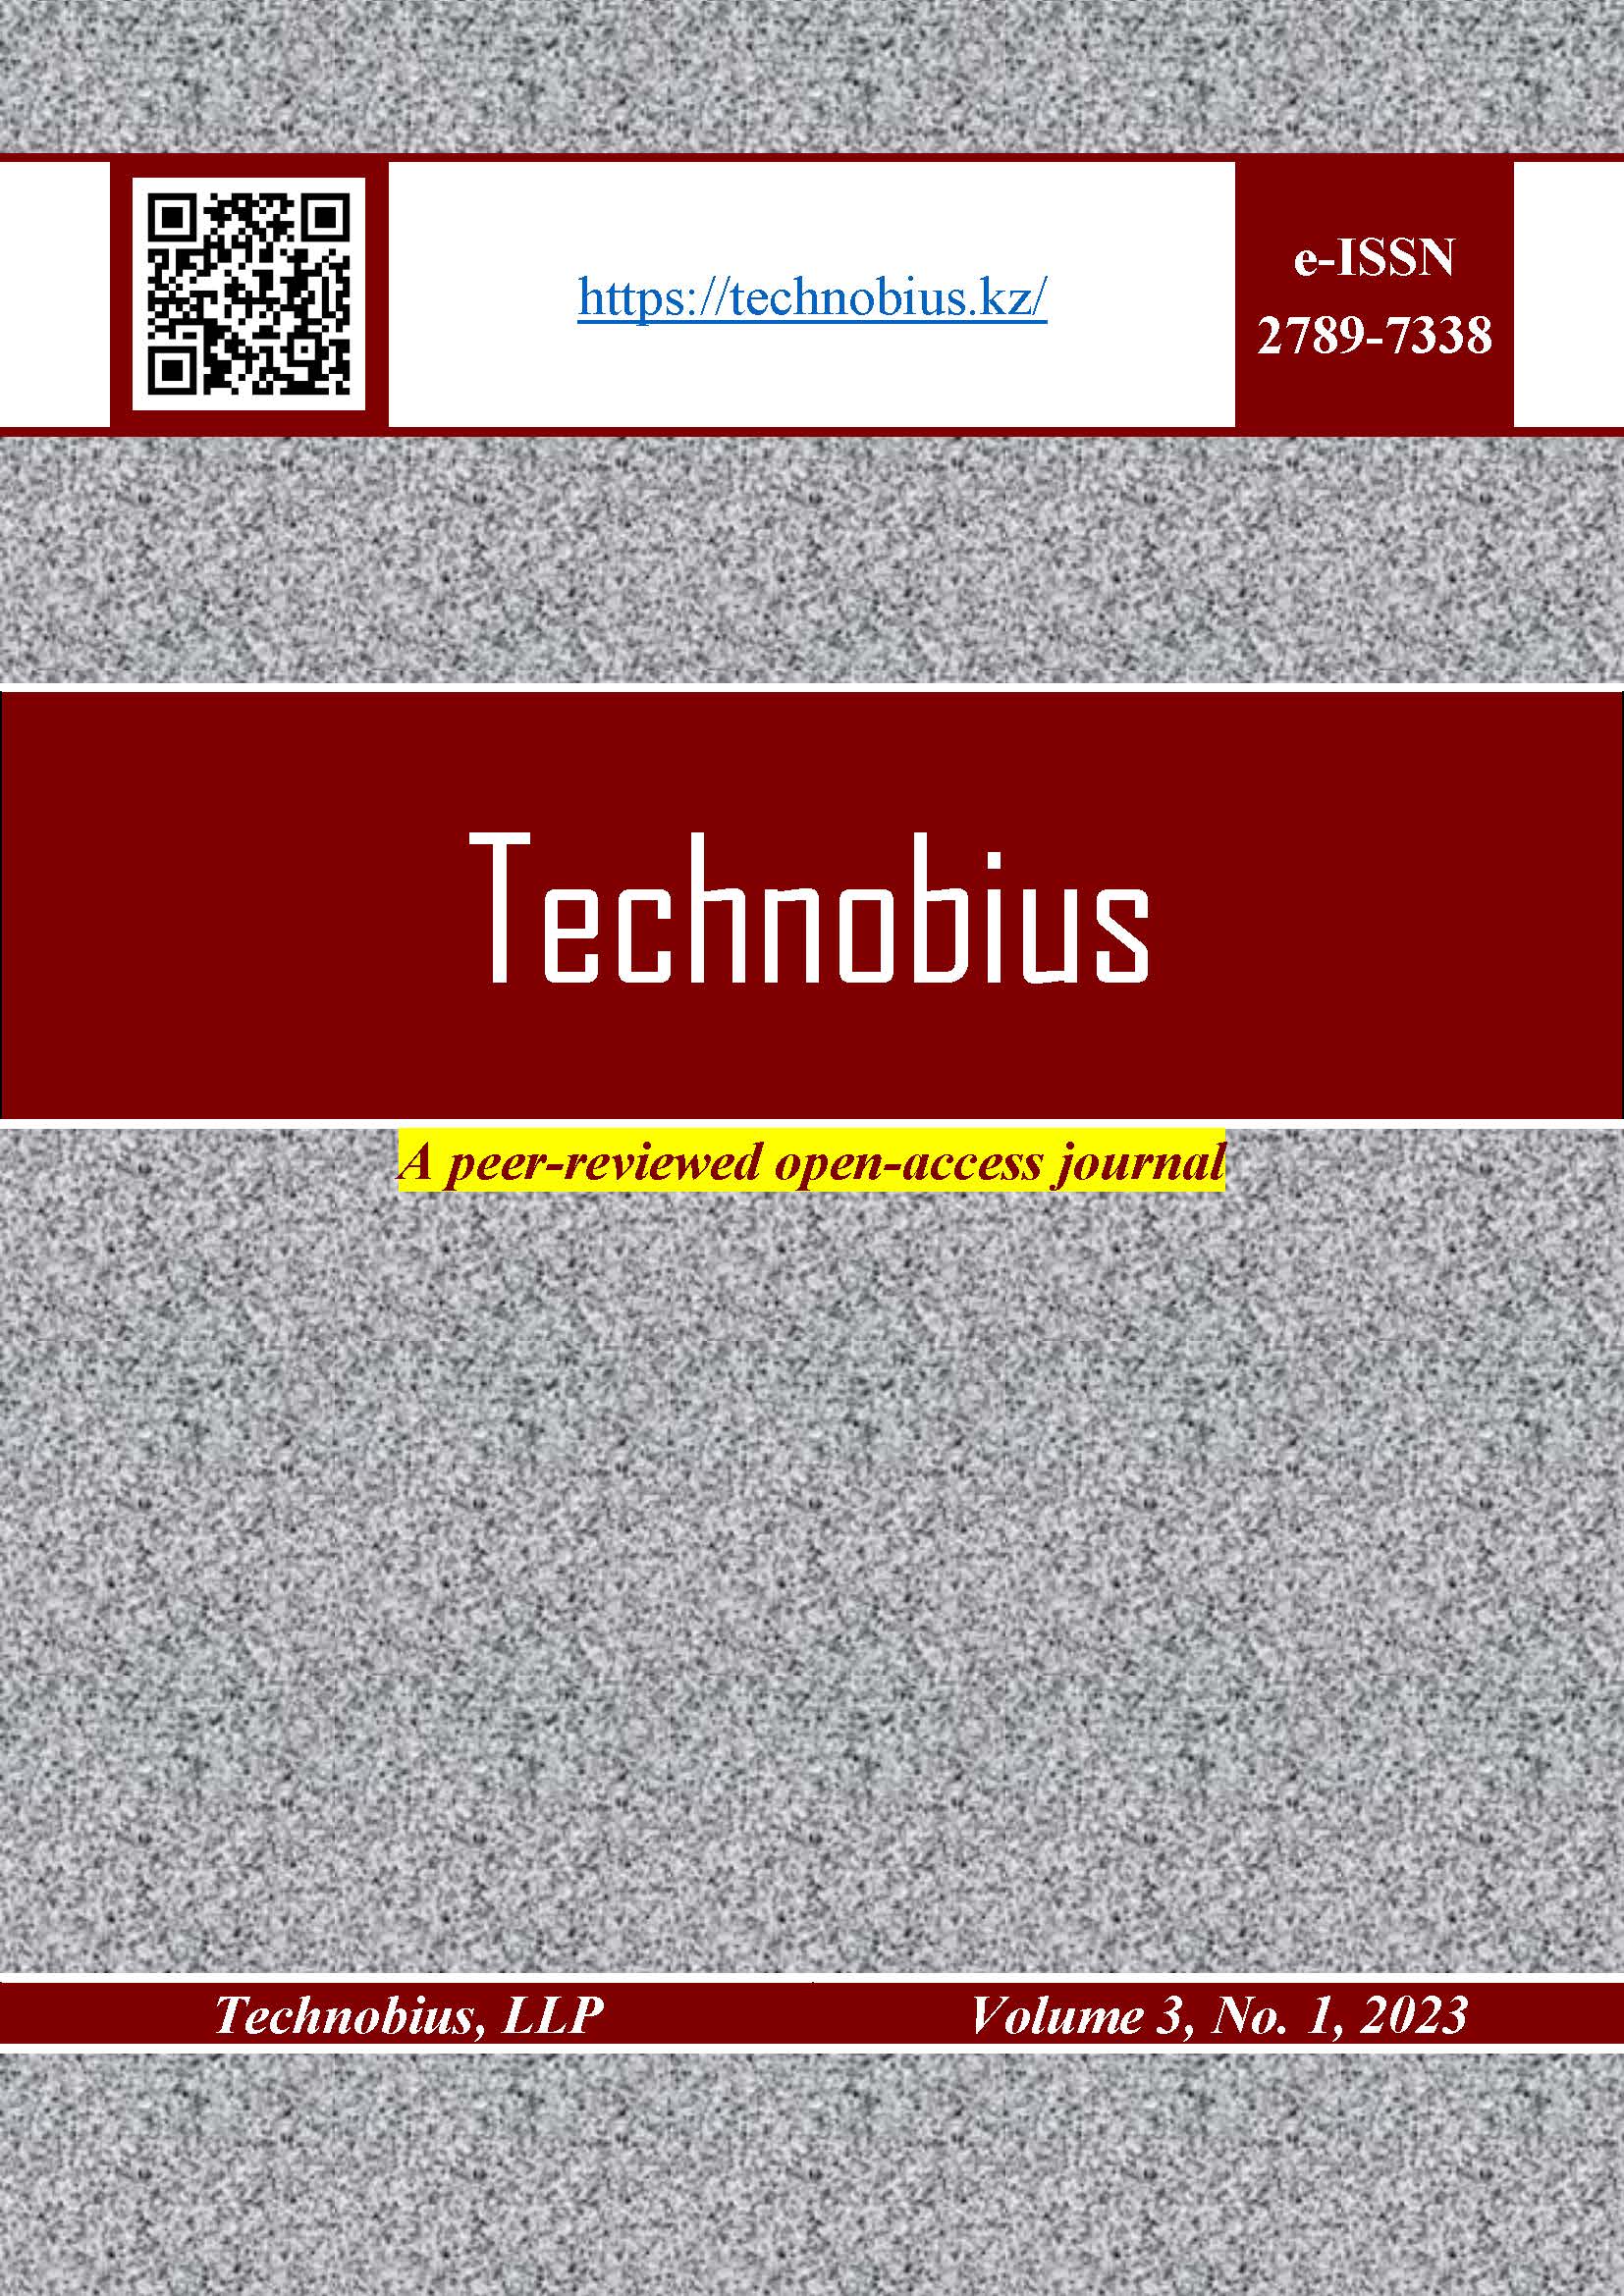 					View Vol. 3 No. 1 (2023): Technobius
				